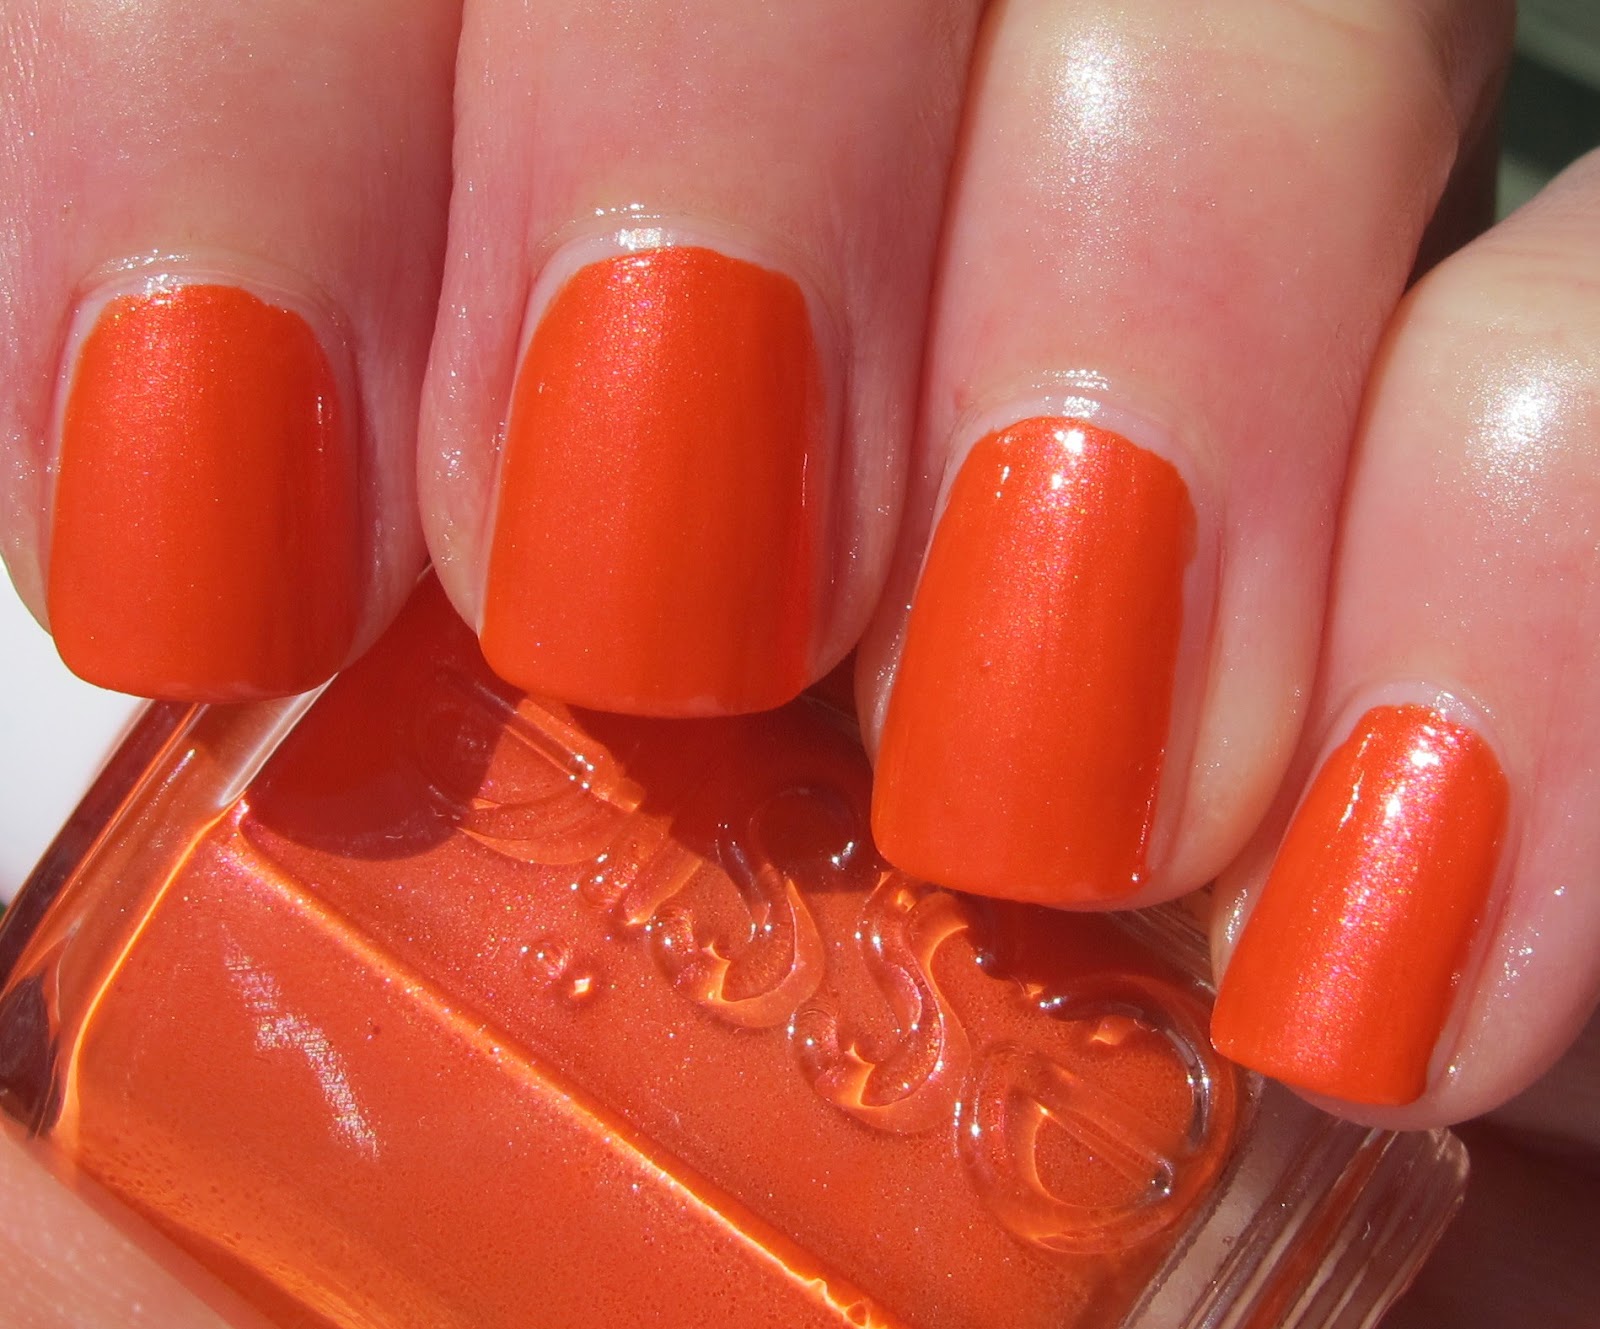 Tangerine Tease - Bright Orange Nail Polish - Essie